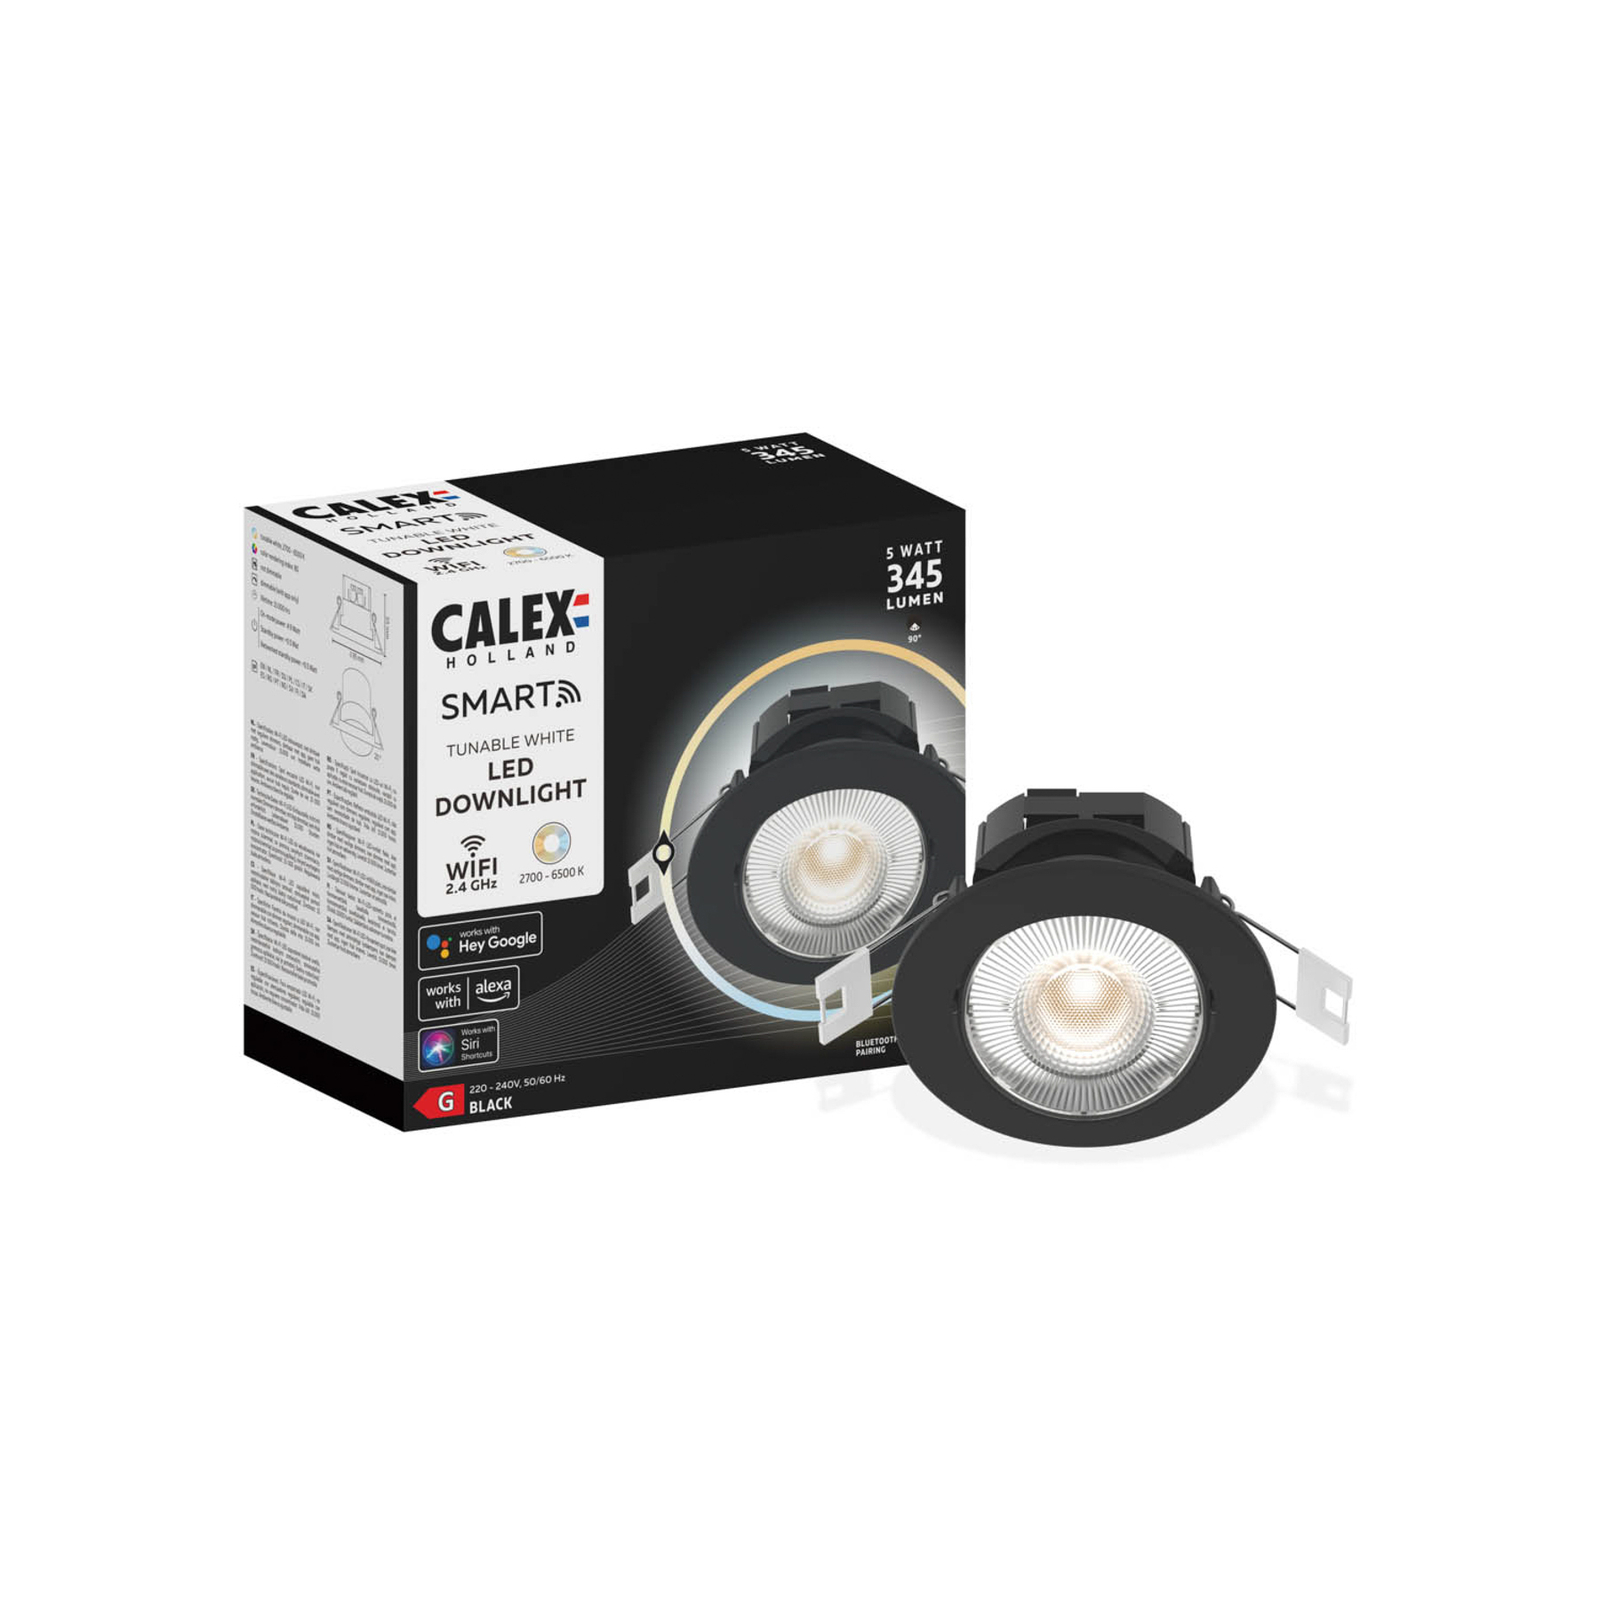 Calex Smart Downlight takinbyggnadslampa, svart